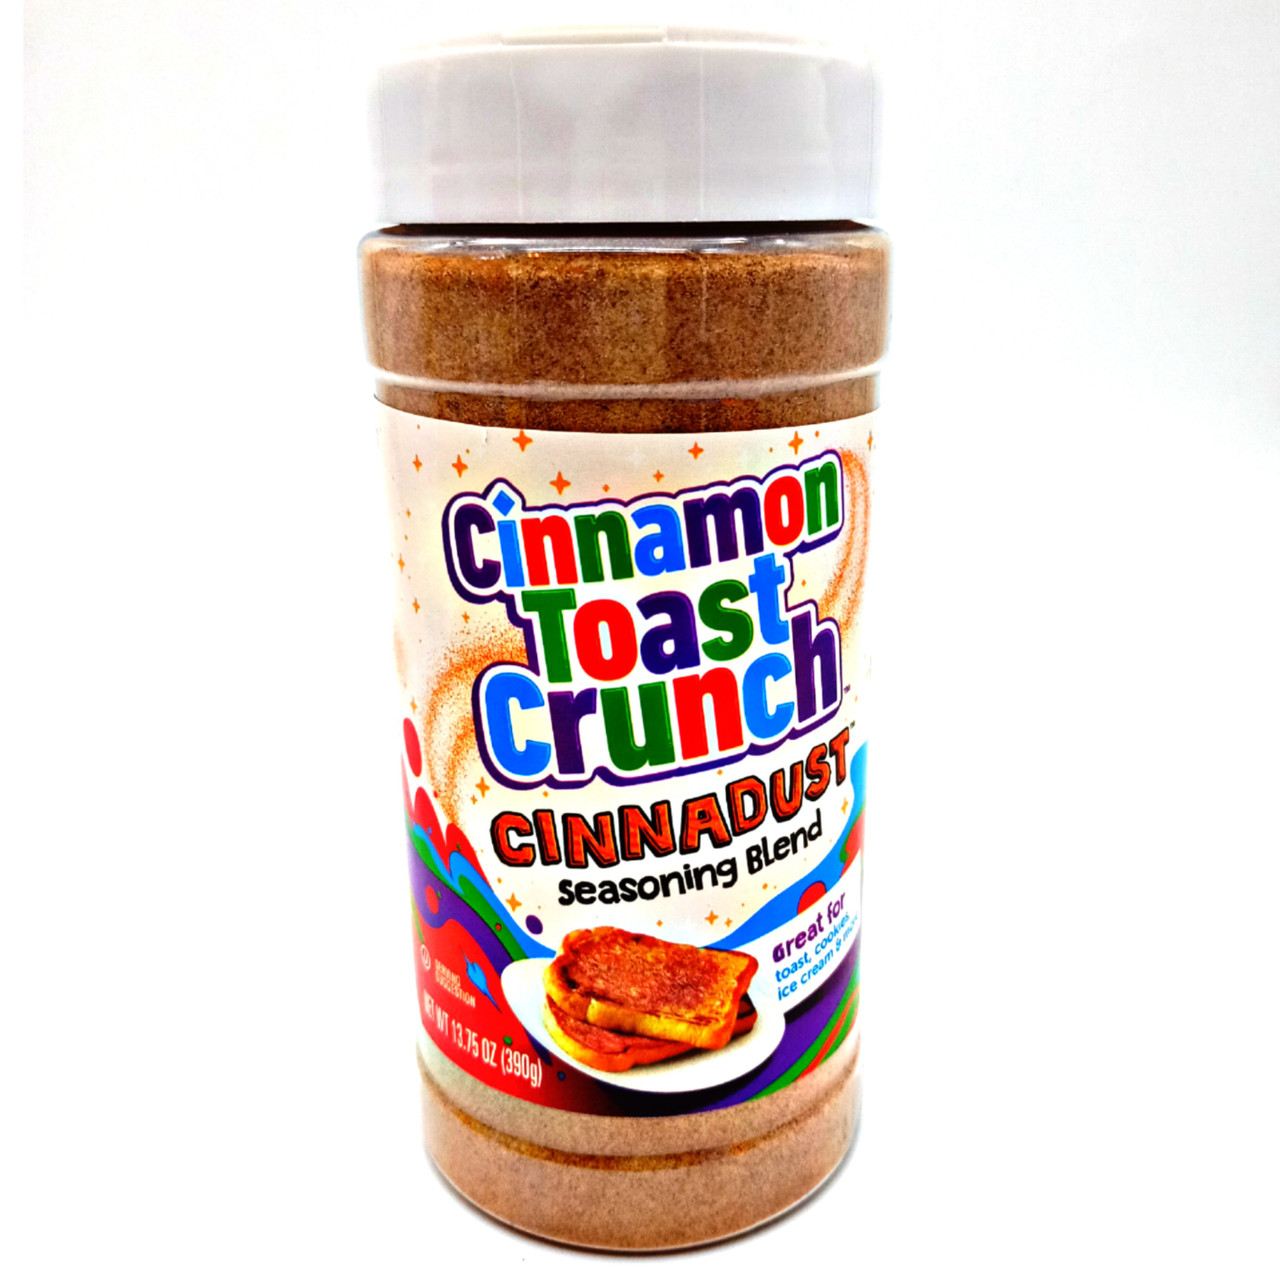 Cinnamon Toast Crunch Cinnadust Seasoning Blend ~ Lot of 2